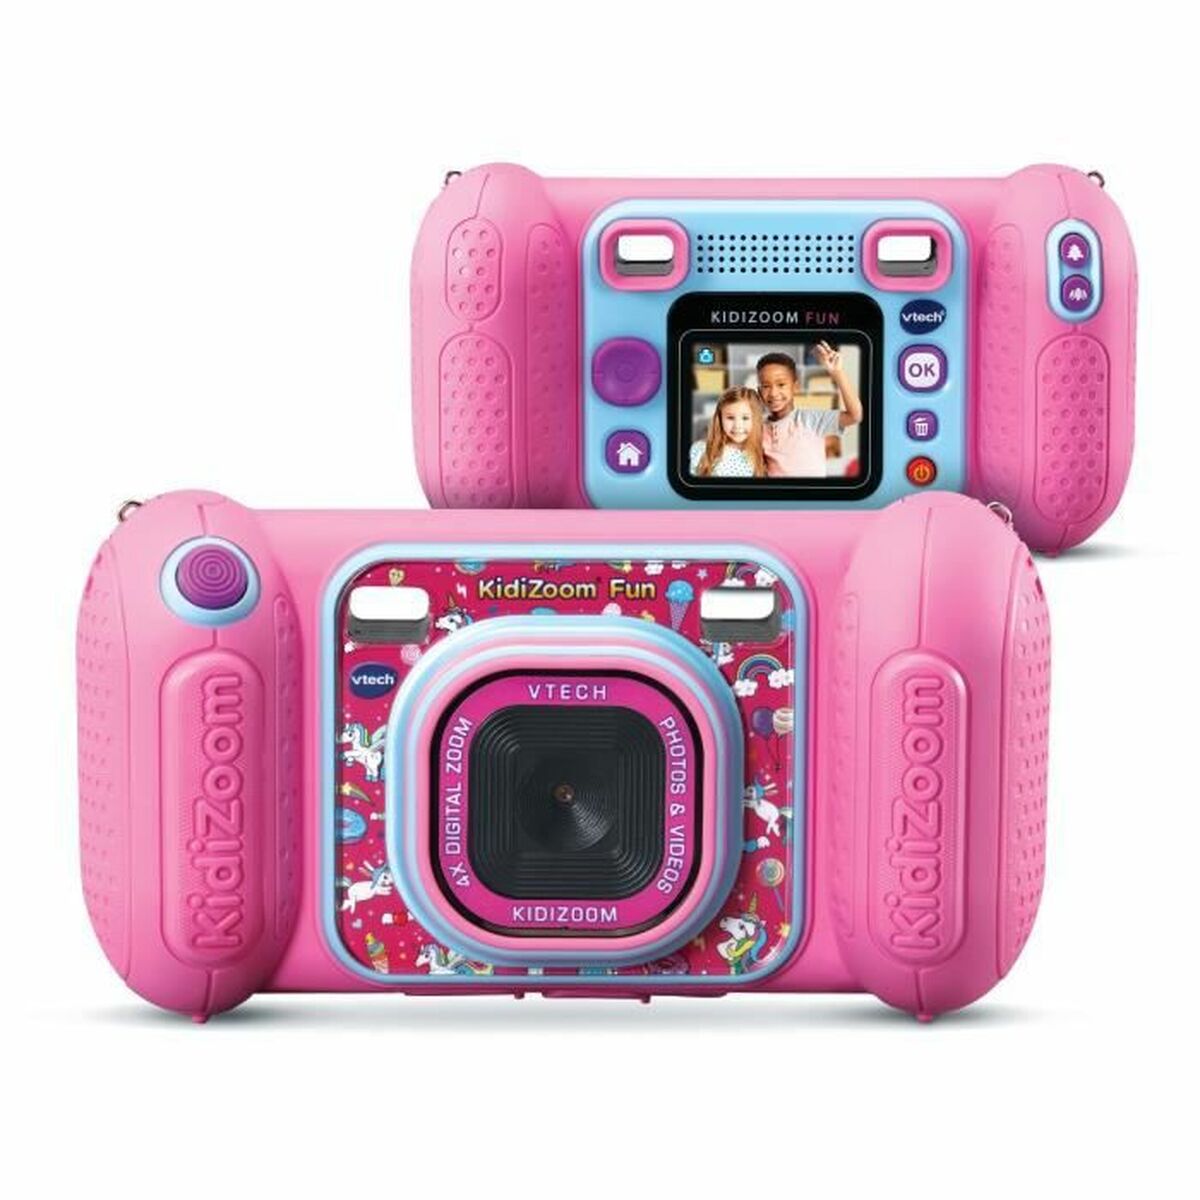 Børns digitalkamera Vtech Kidizoom Fun Pink